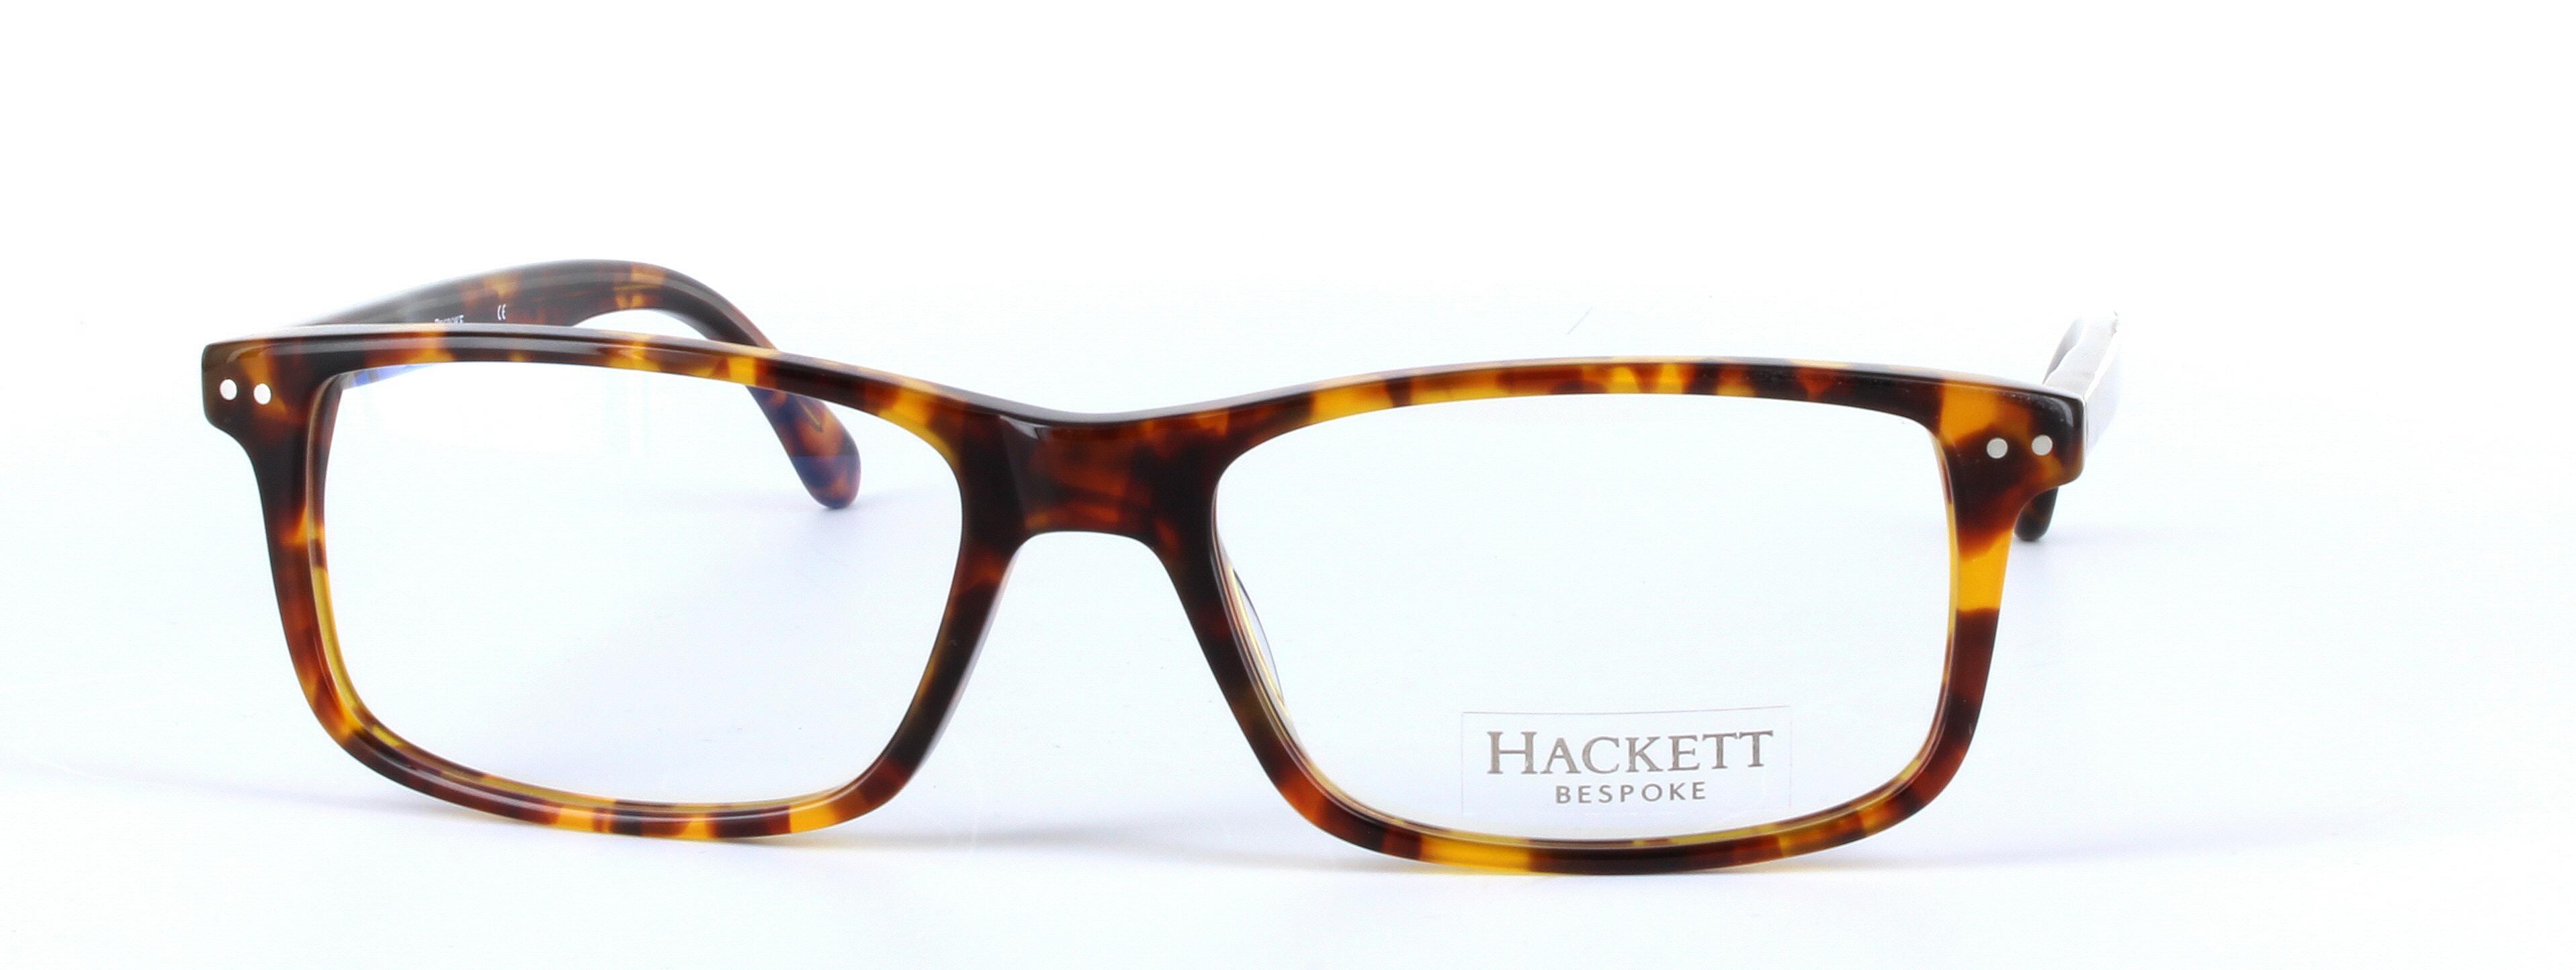 HACKETT BESPOKE (HEB133-127) Brown Full Rim Oval Rectangular Acetate Glasses - Image View 5